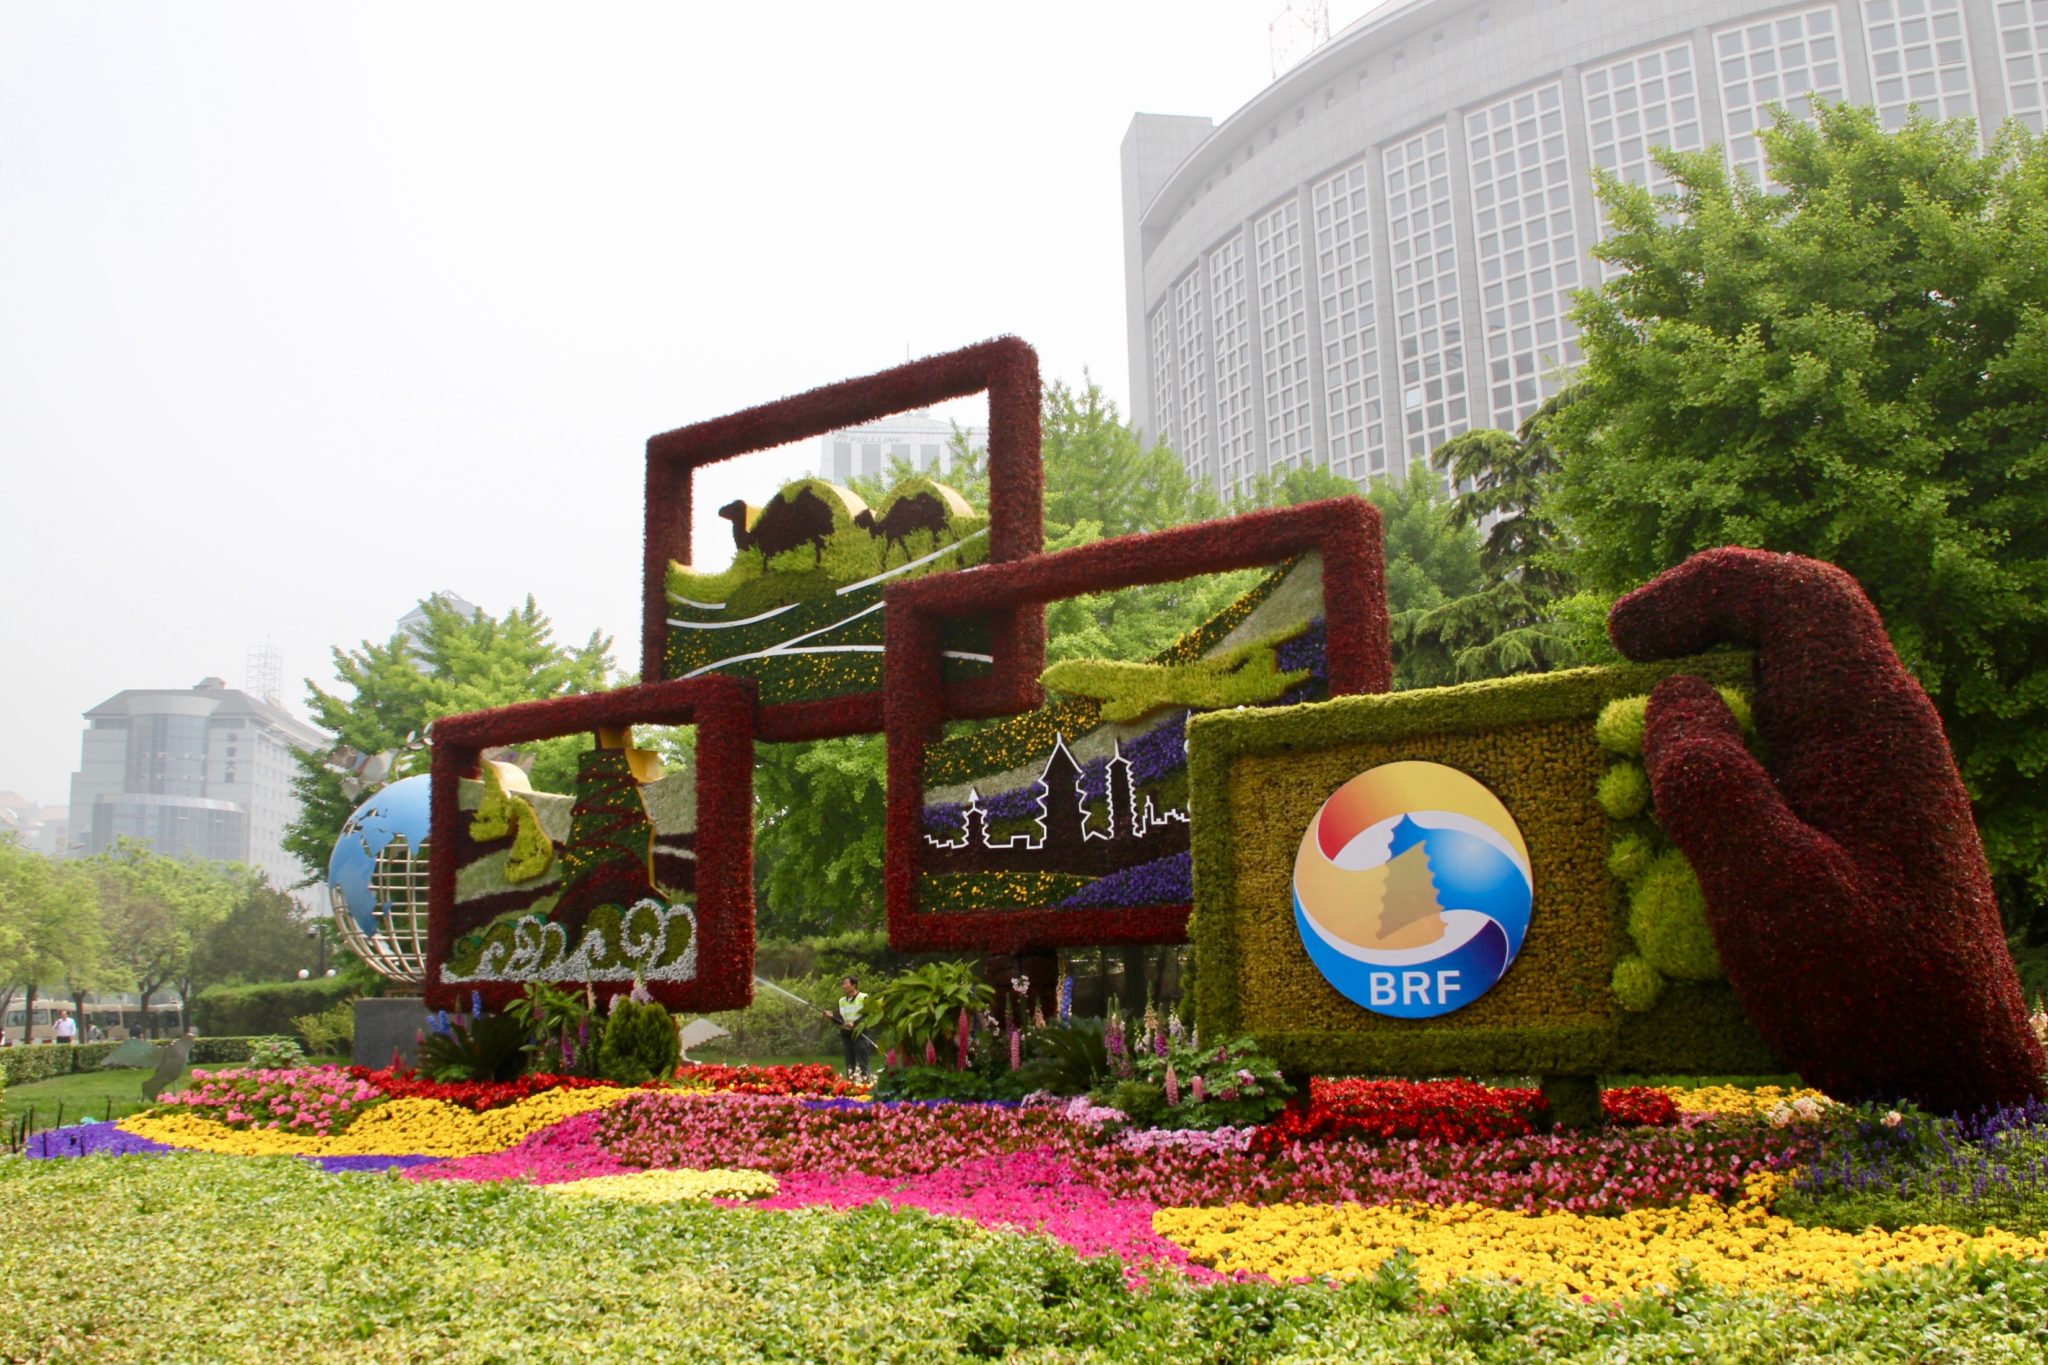 <p>Garden sculptures commemorate the second Belt and Road Forum in Beijing (image: Lili Pike)</p>